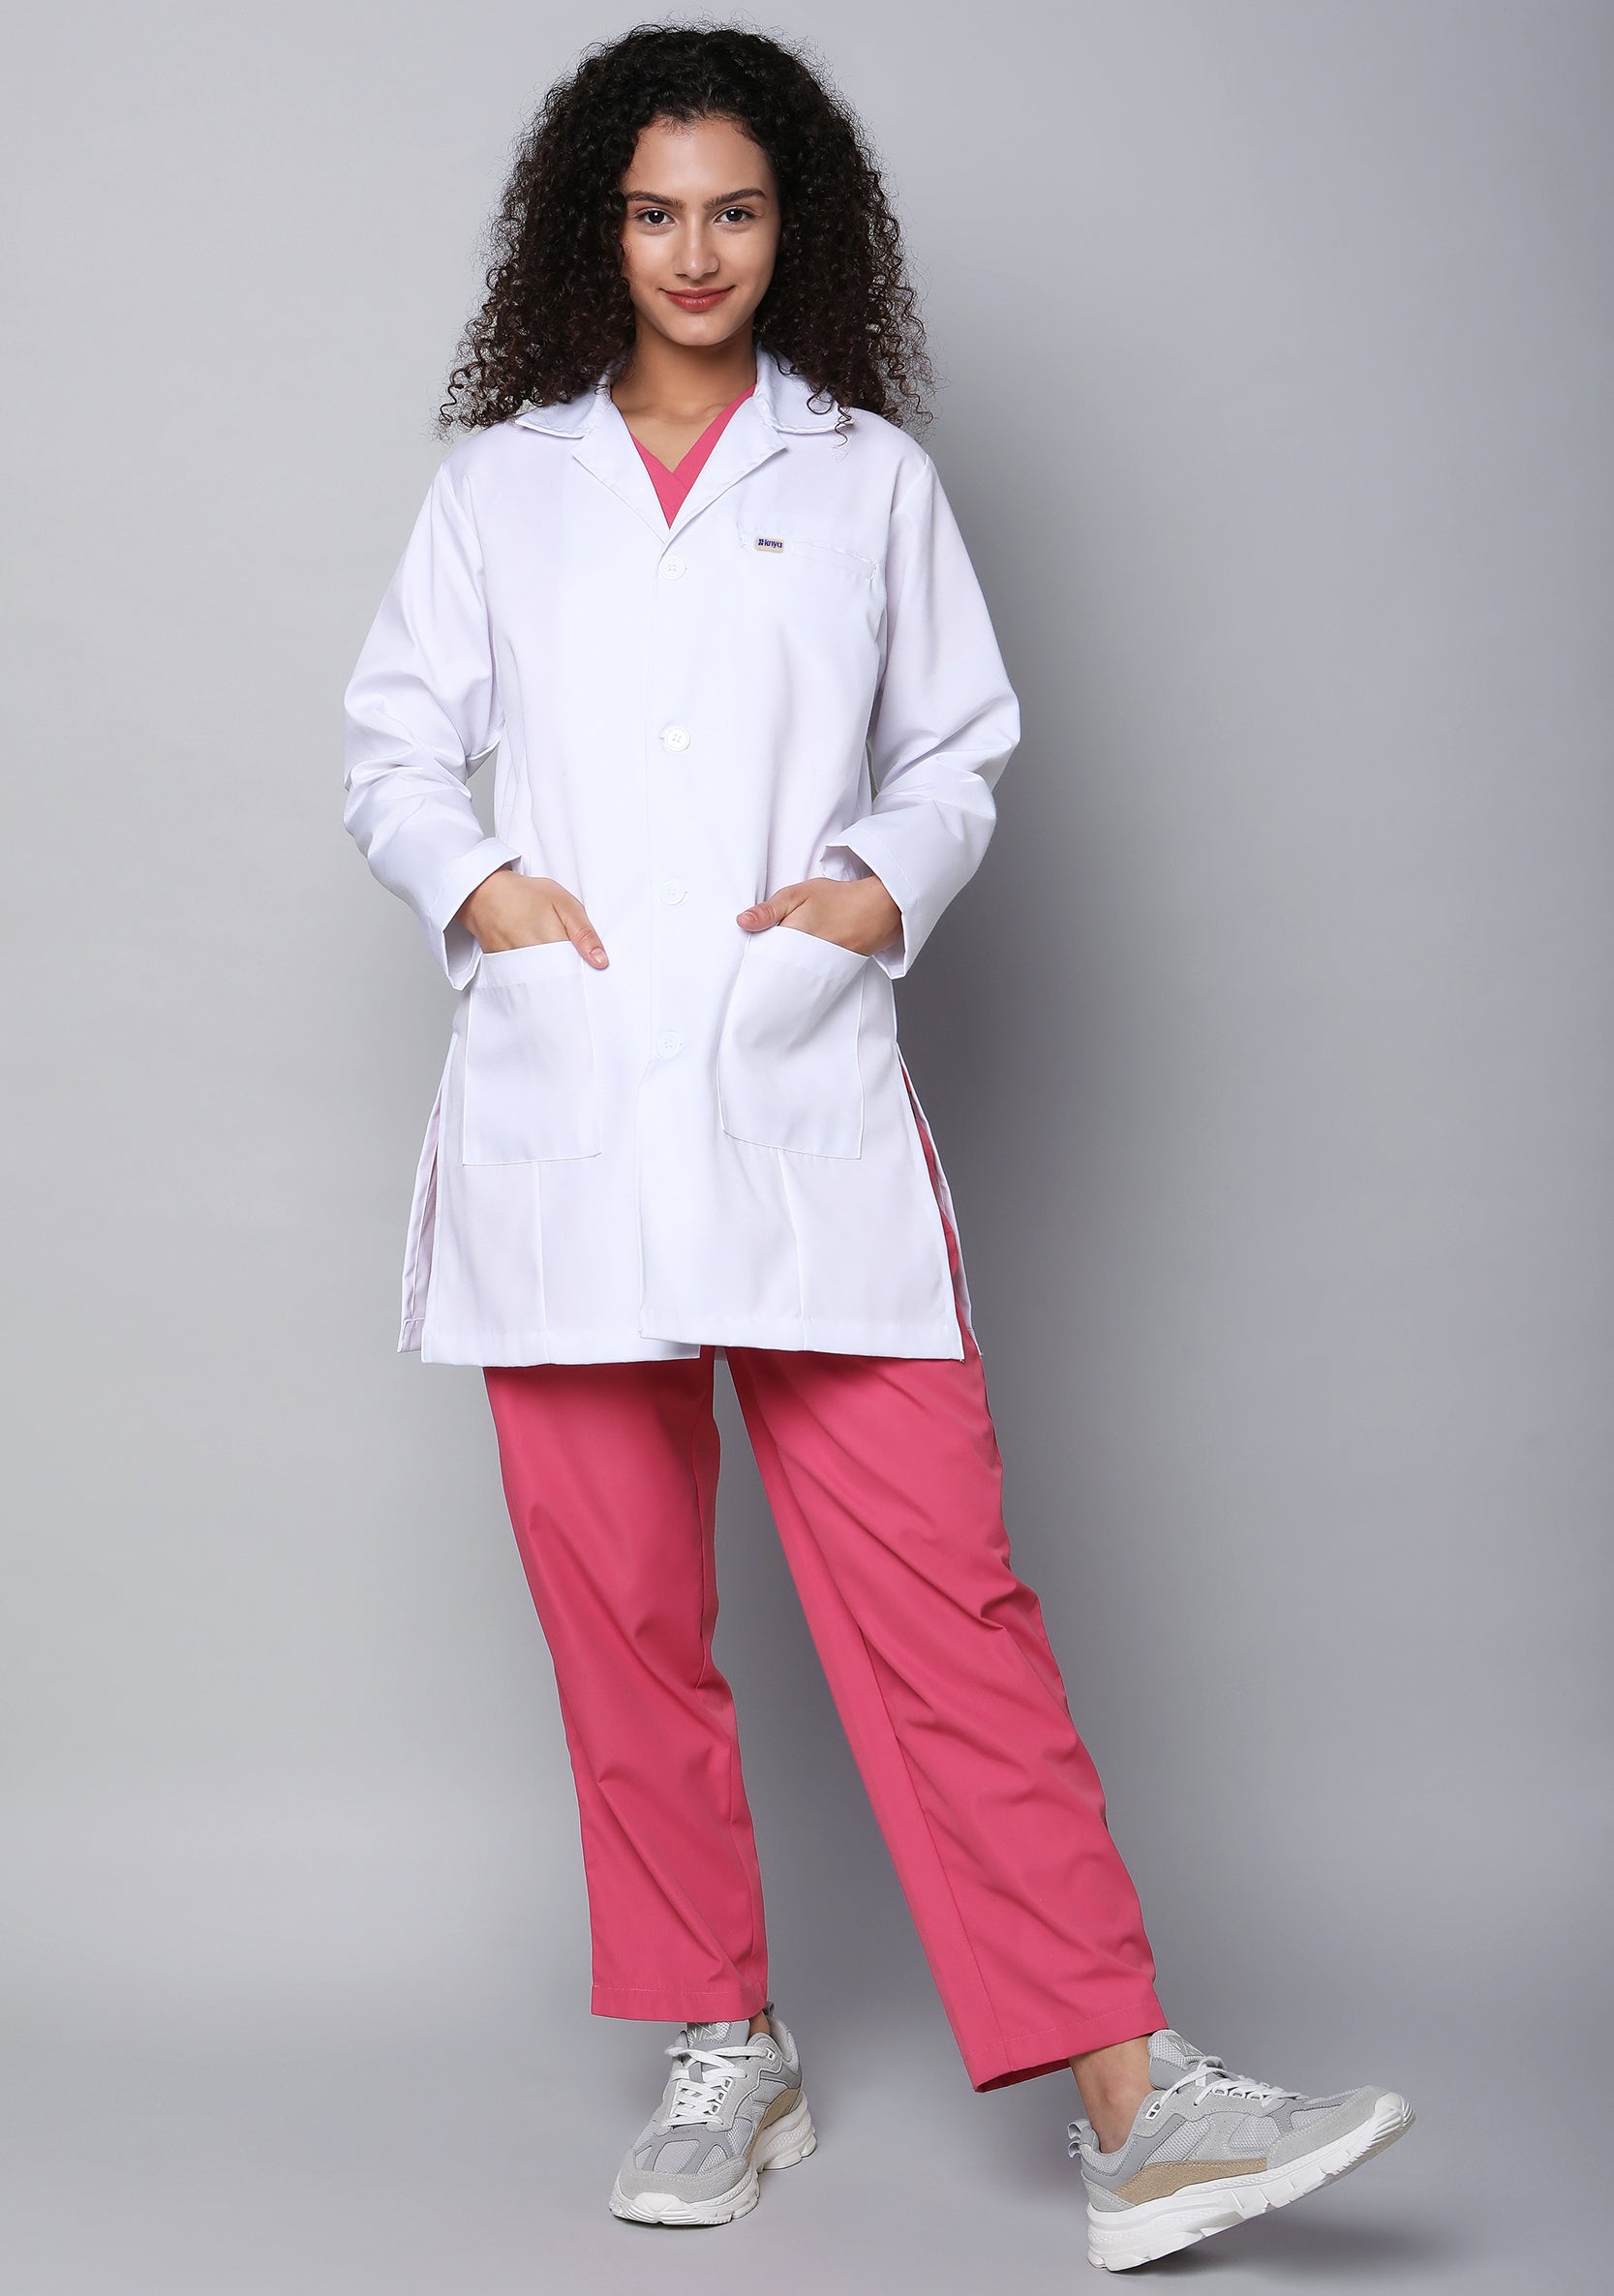 Women Coat, white Coat, lab Coats, scrubs, Overall, lab, cuff, clothes  Hanger, laboratory, dress Shirt | Anyrgb